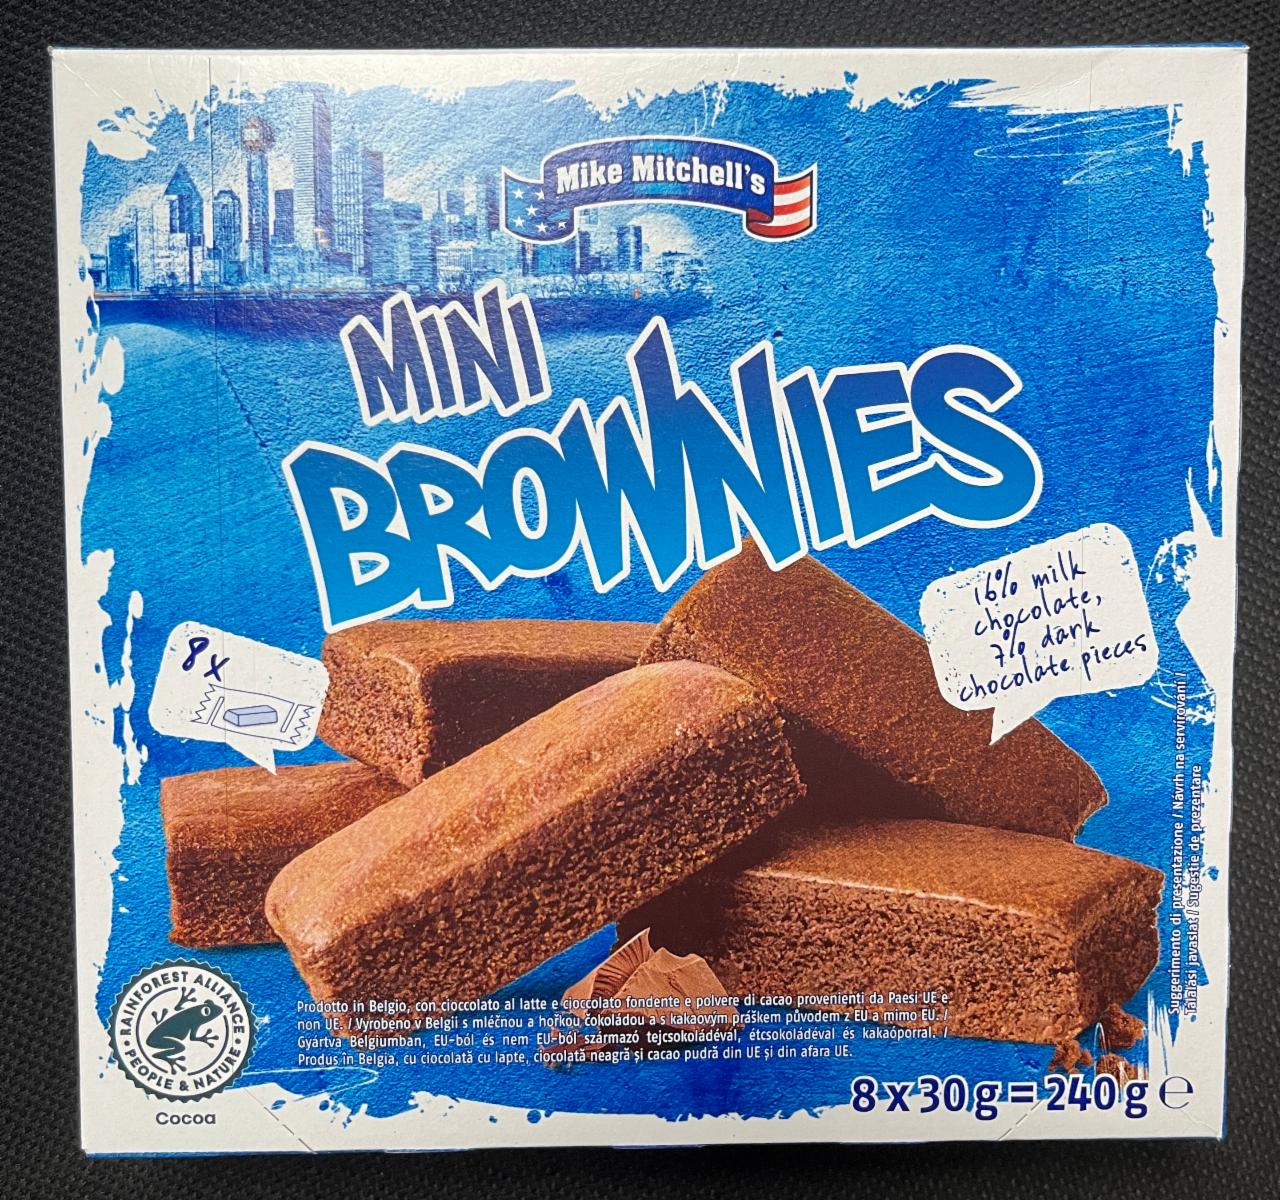 Fotografie - Mini brownies Mike Mitchell's